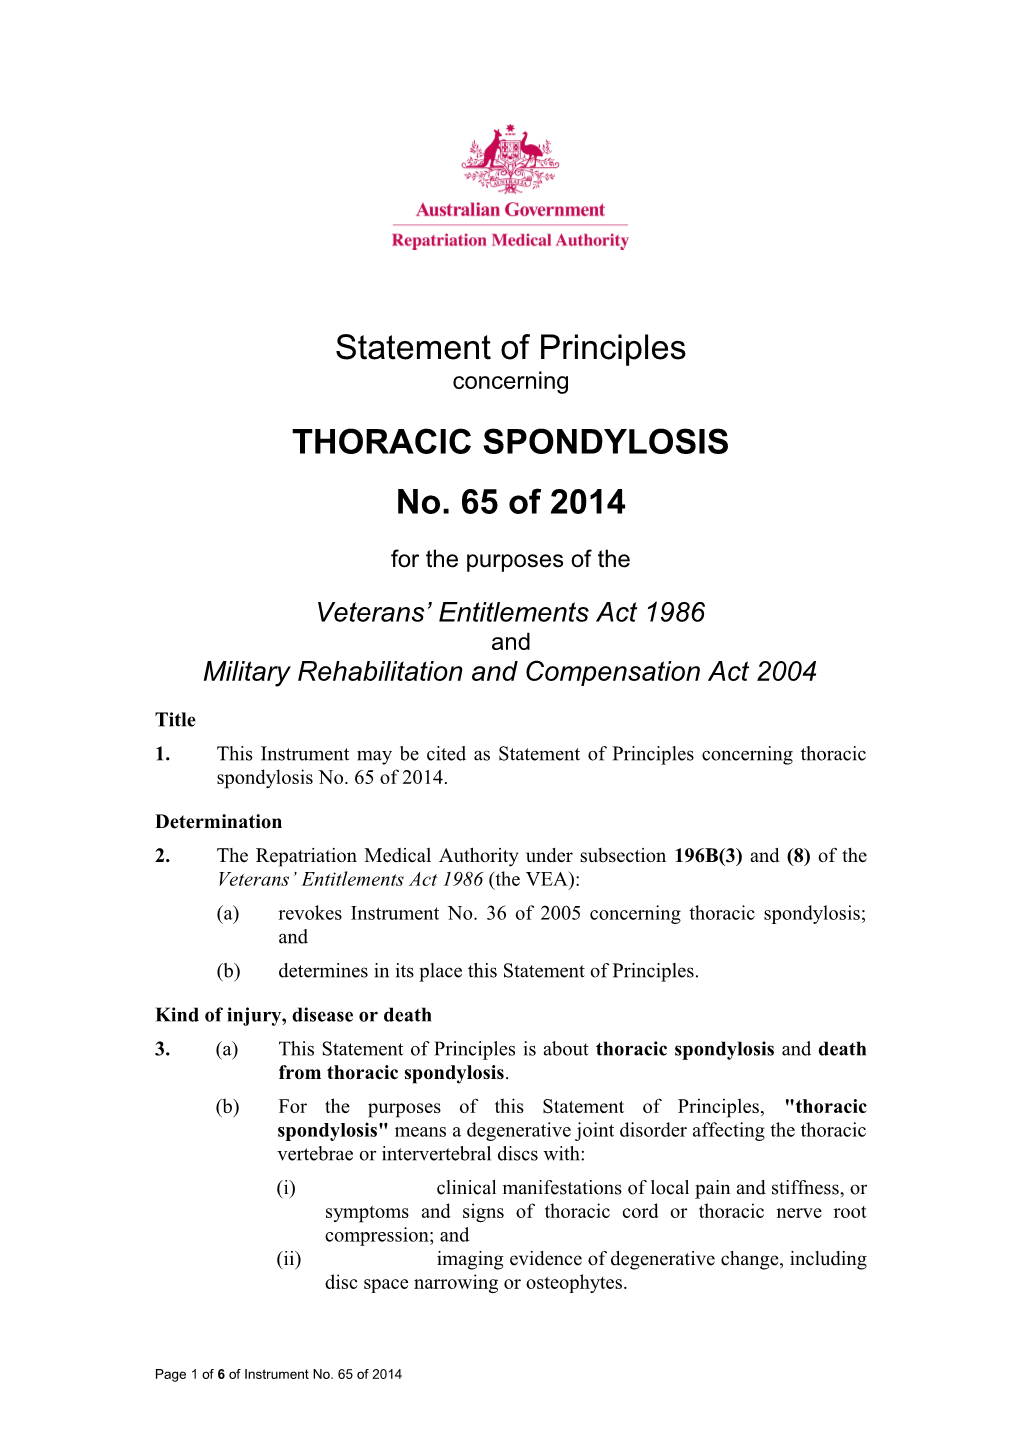 Thoracic Spondylosis